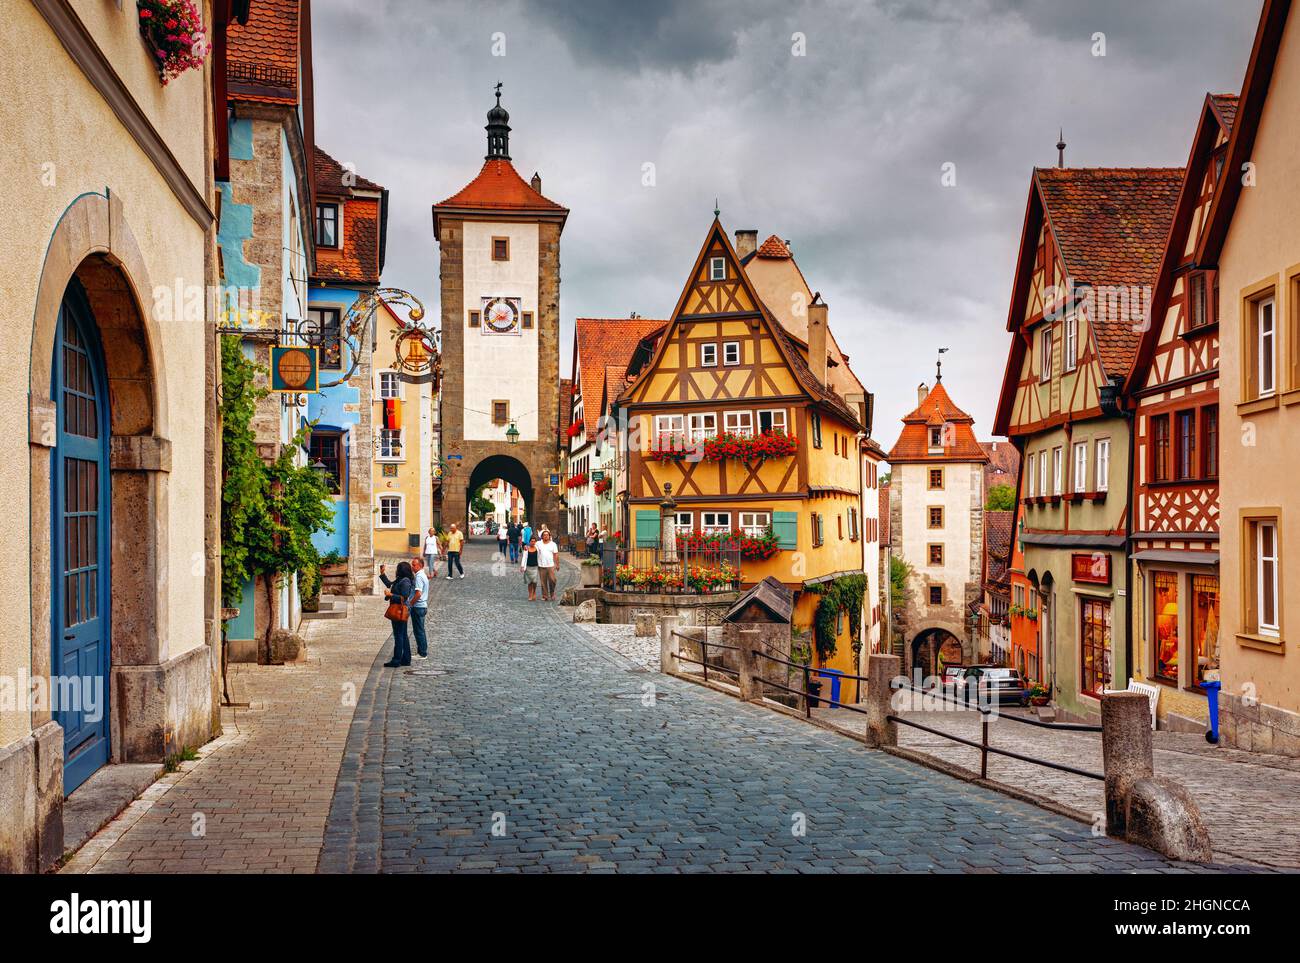 Alemania, Ansbach - Ciudad Medieval Rothenburg ob der Tauber - Plönlein con Kobolzeller Steige y Spitalgasse Foto de stock